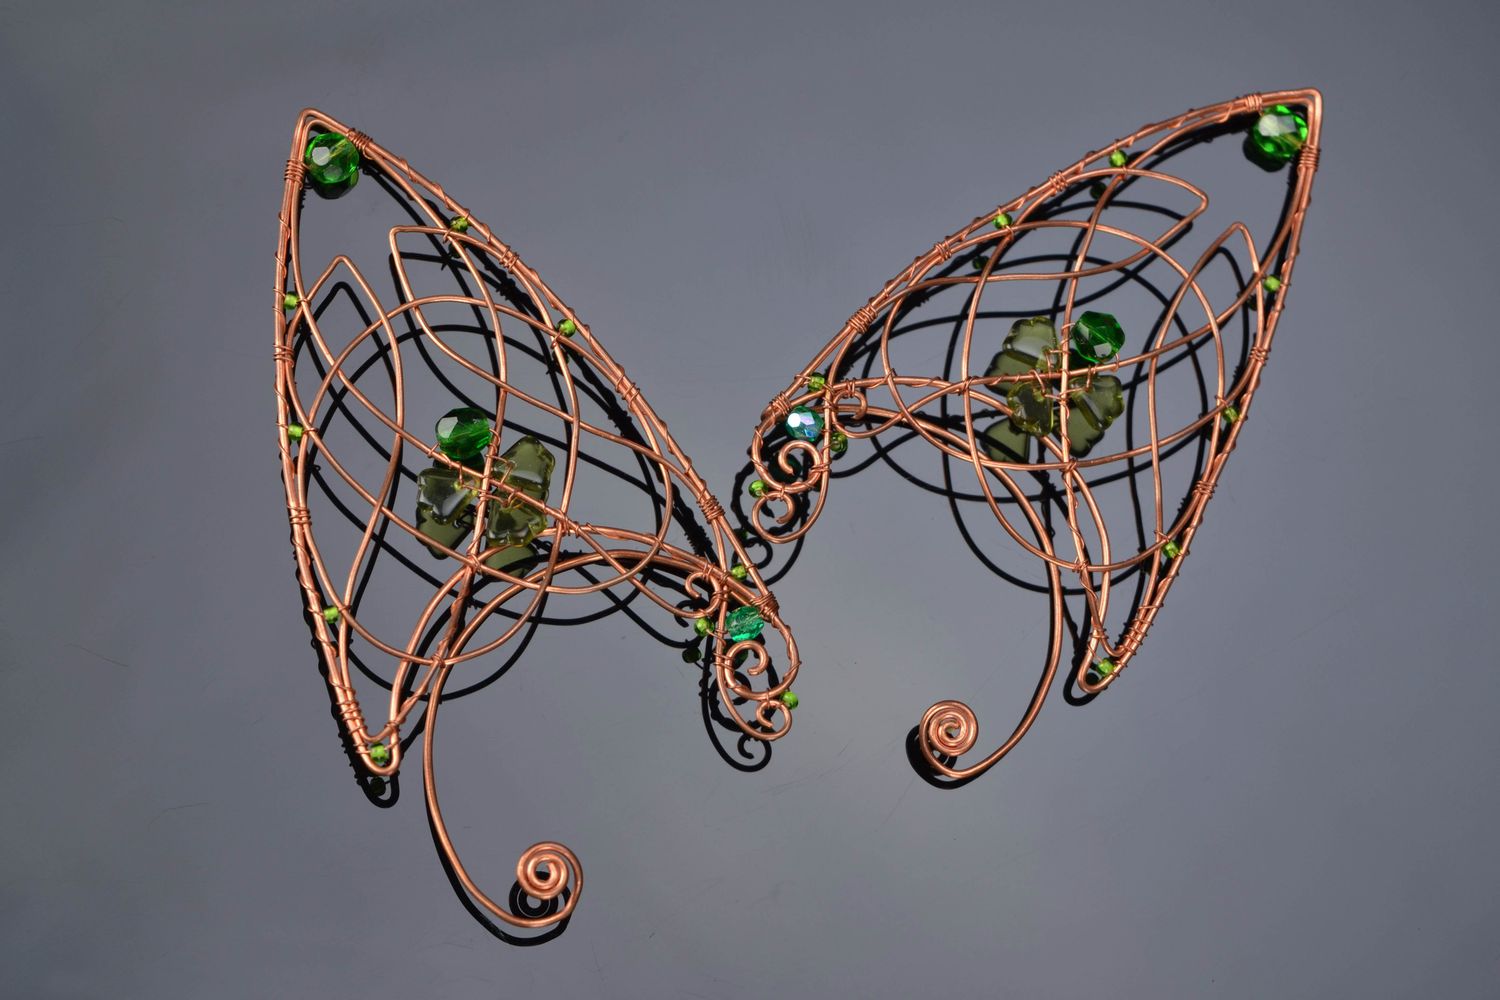 Metal woven cuff earrings in elves style photo 1